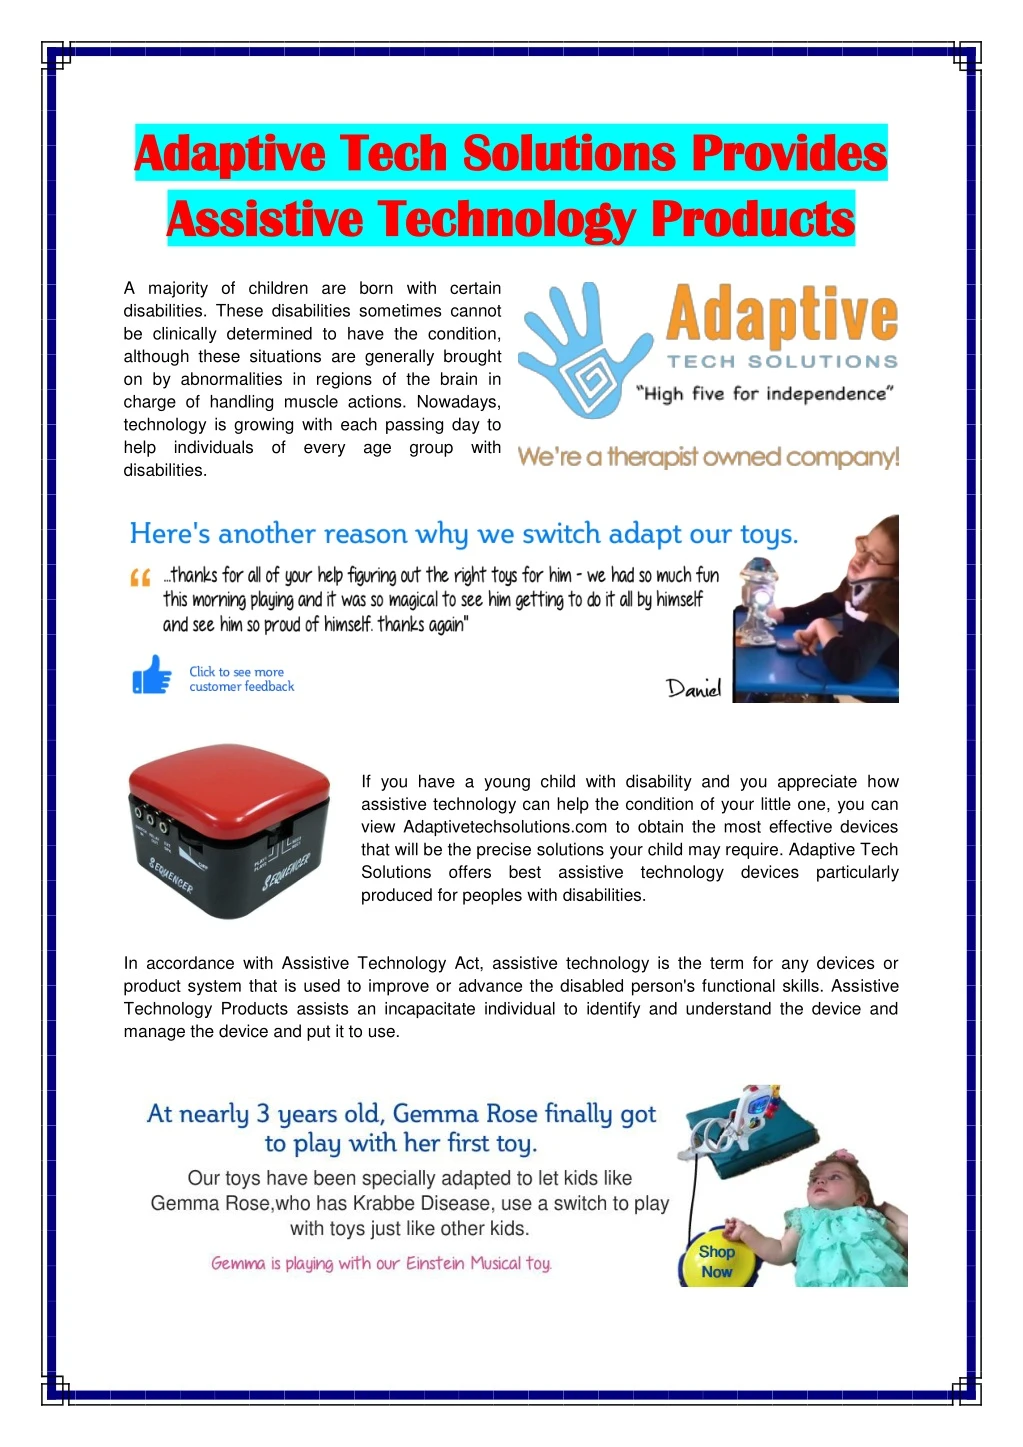 adaptive tech solutions provides adaptive tech